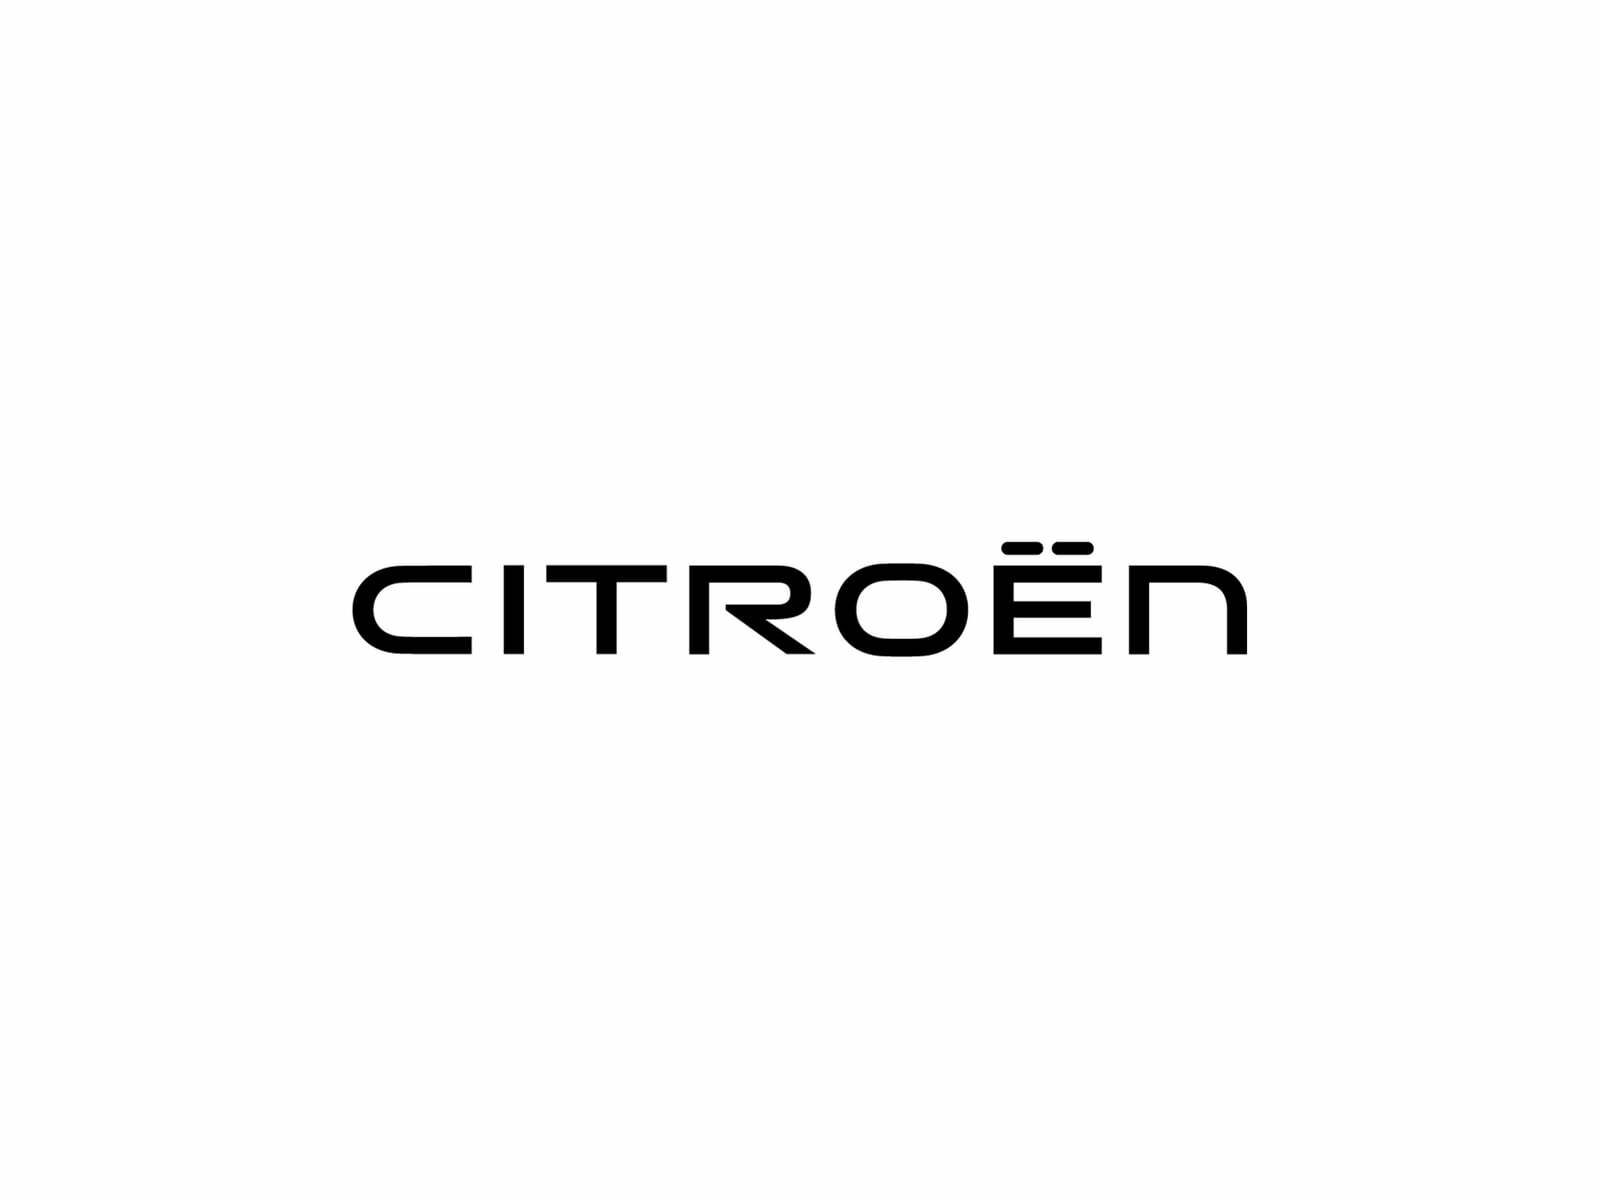 New Citroën Lettering_black